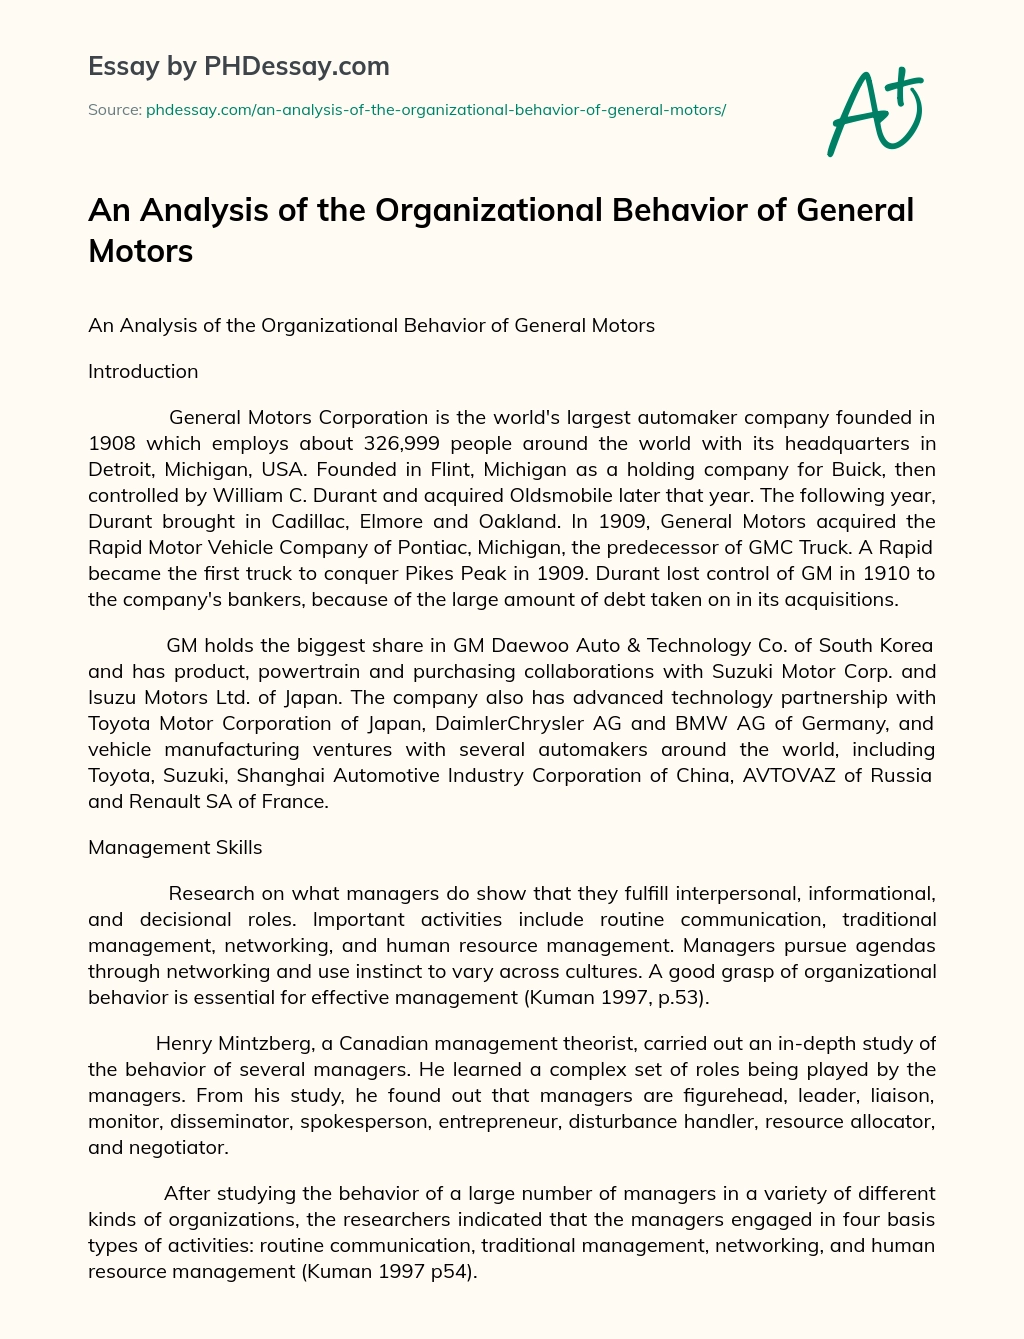 An Analysis of the Organizational Behavior of General Motors essay